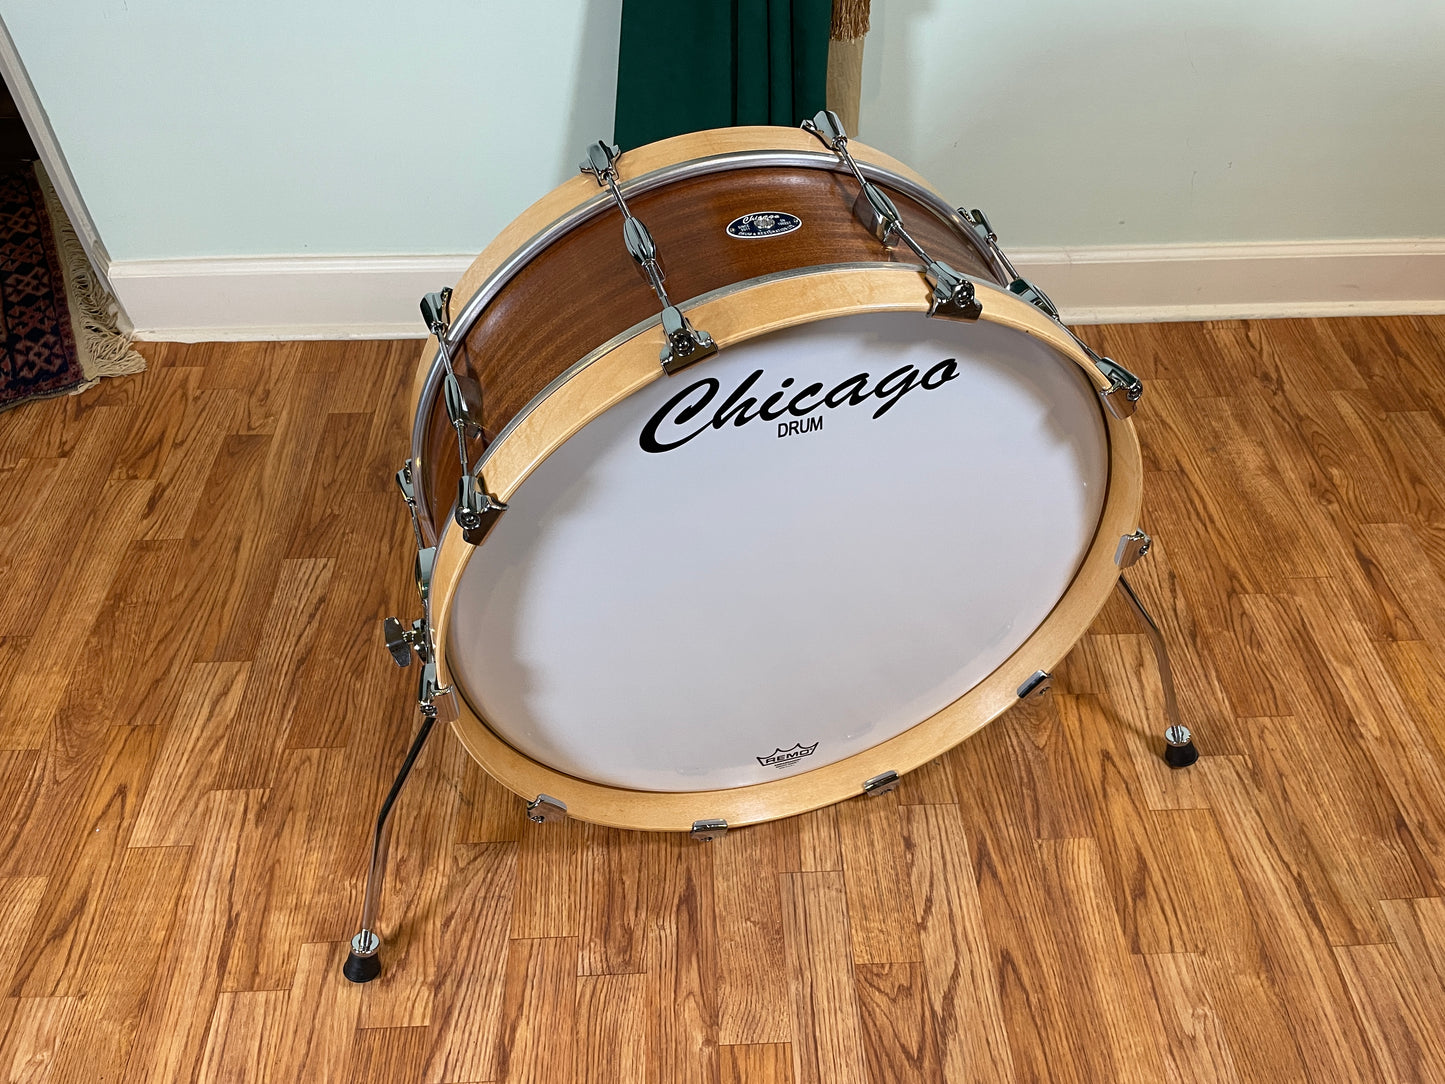 Chicago Drum 8x22 Bass Drum Mahogany/Poplar Tung Oil Finish